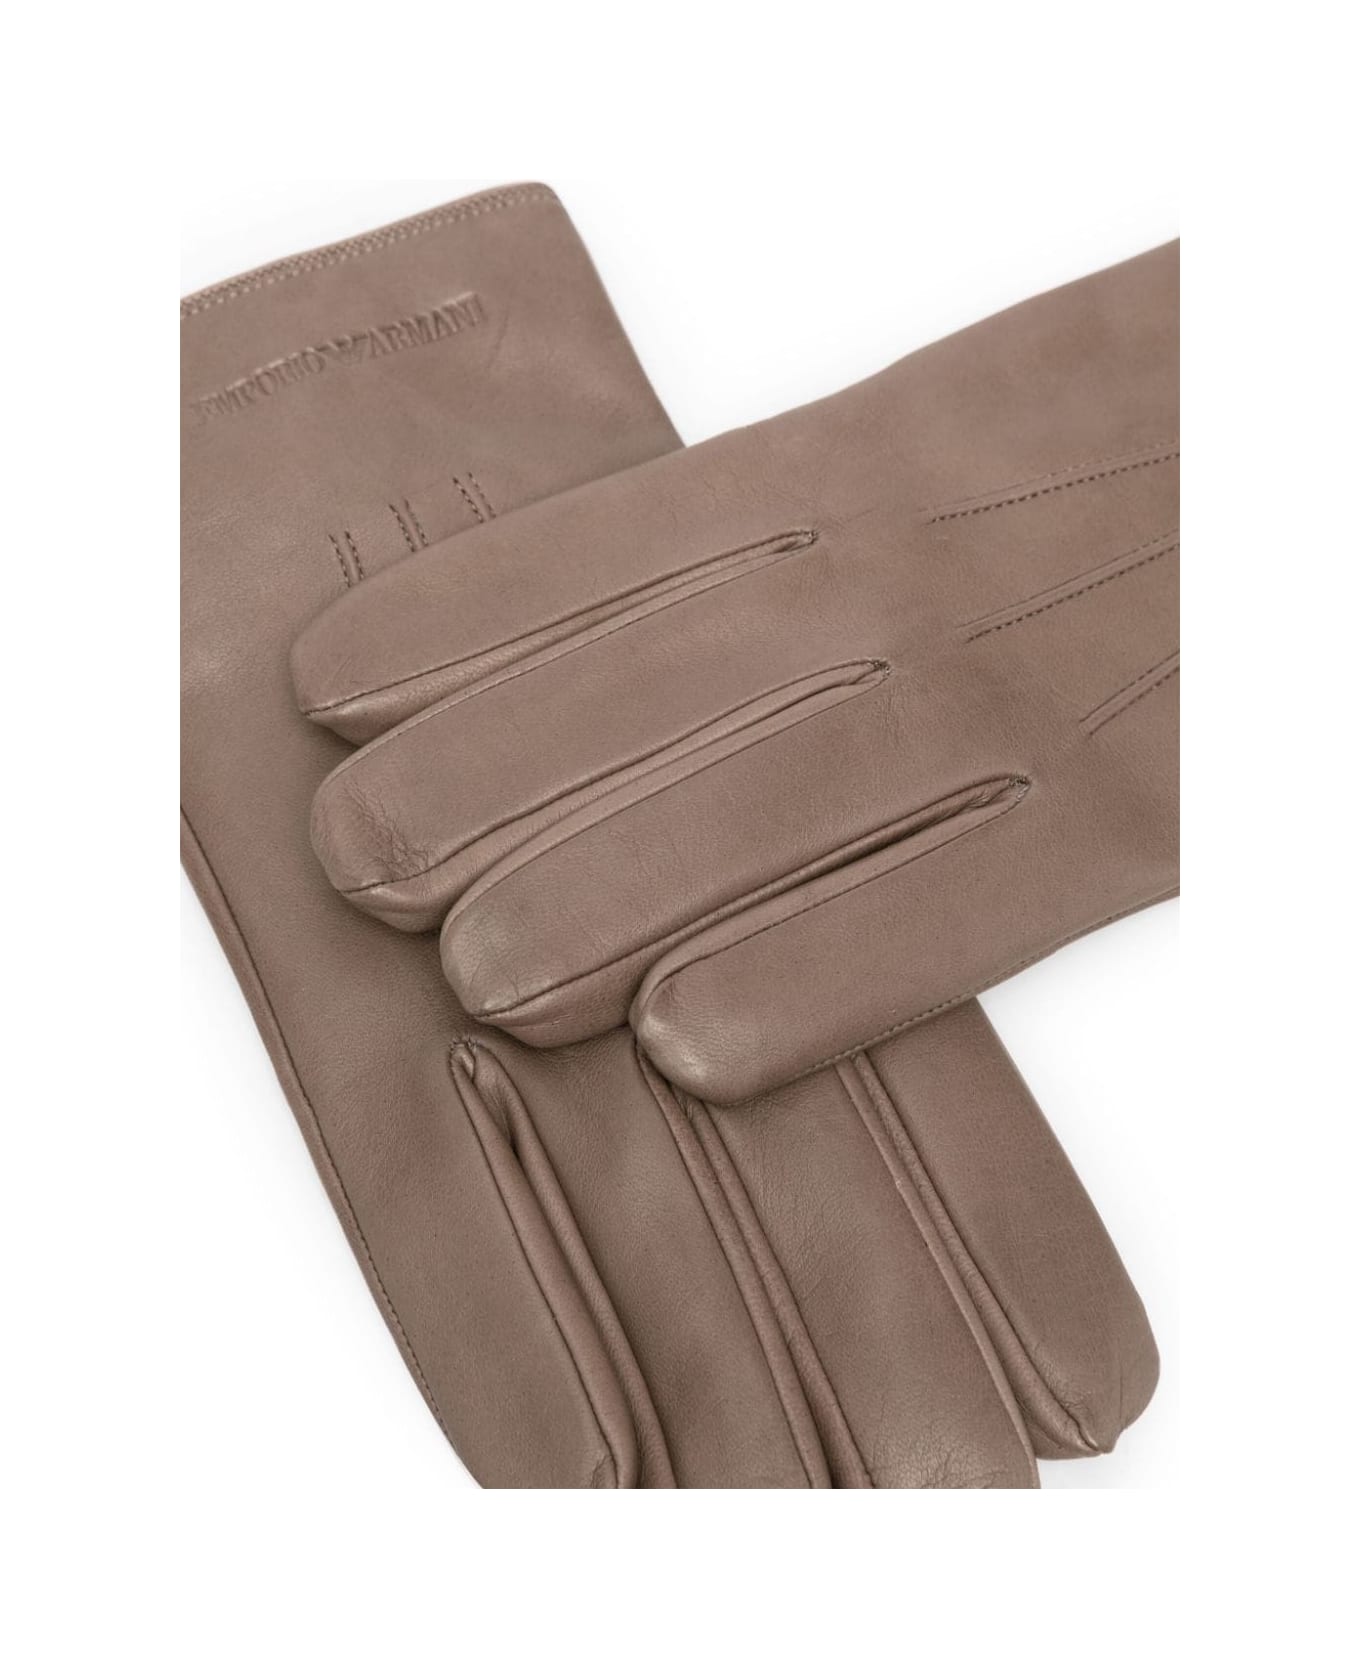 Emporio Armani Leather Man Gloves - Dove Grey